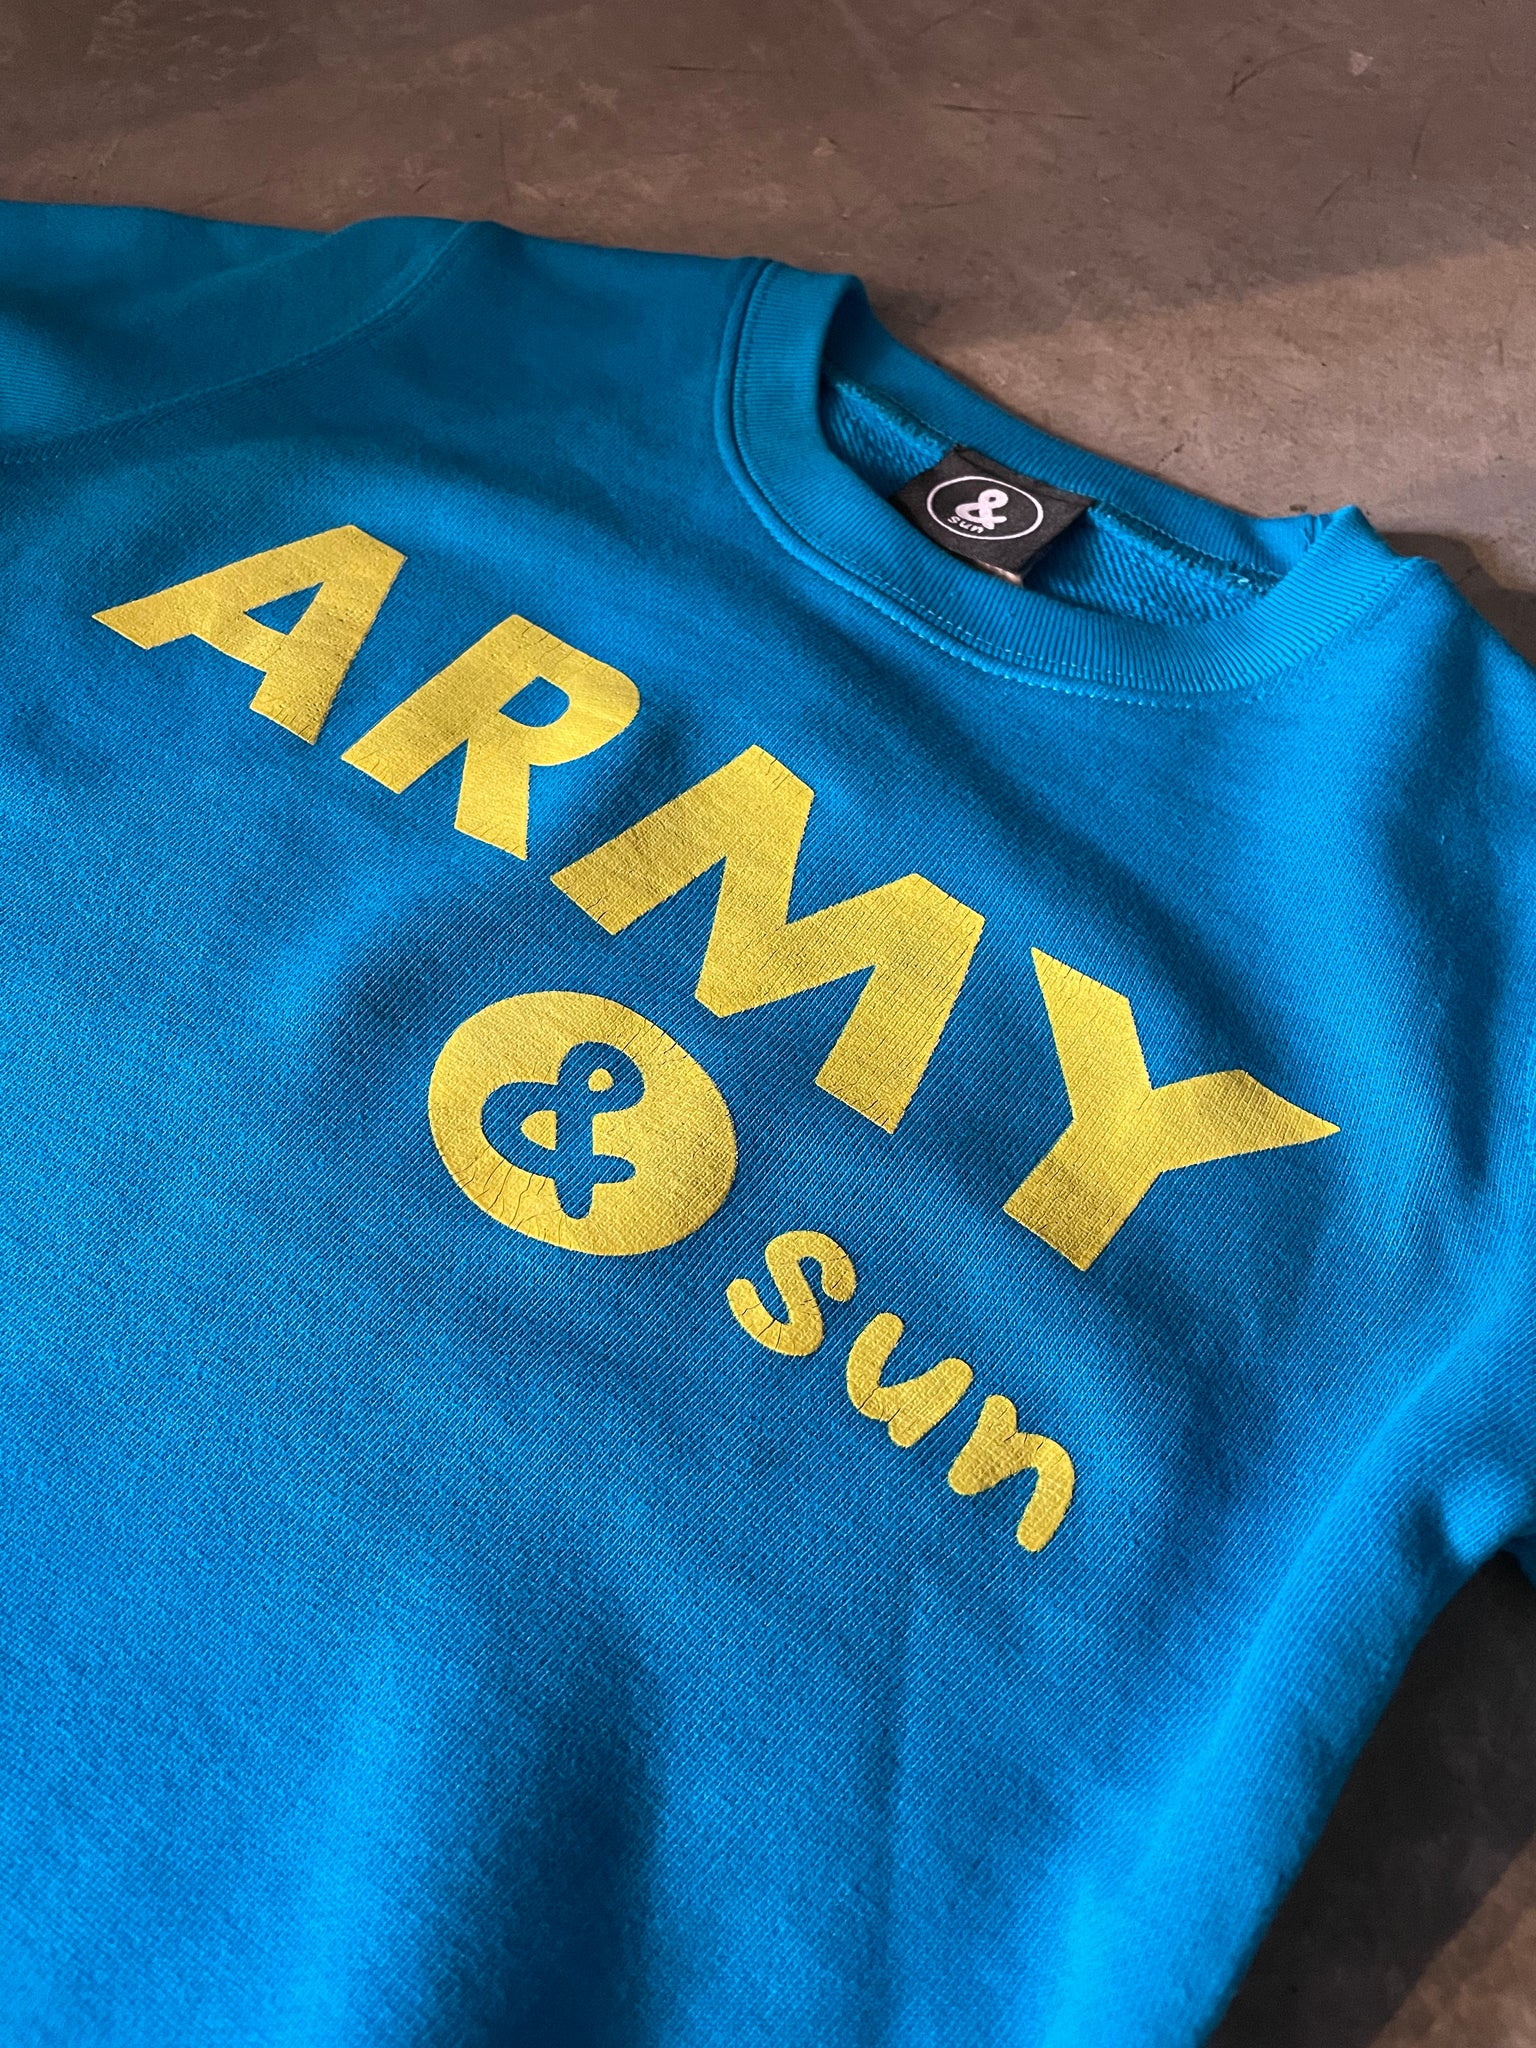 ARMY &sun スウェットトレーナー  ターコイズブルー × イエローロゴ